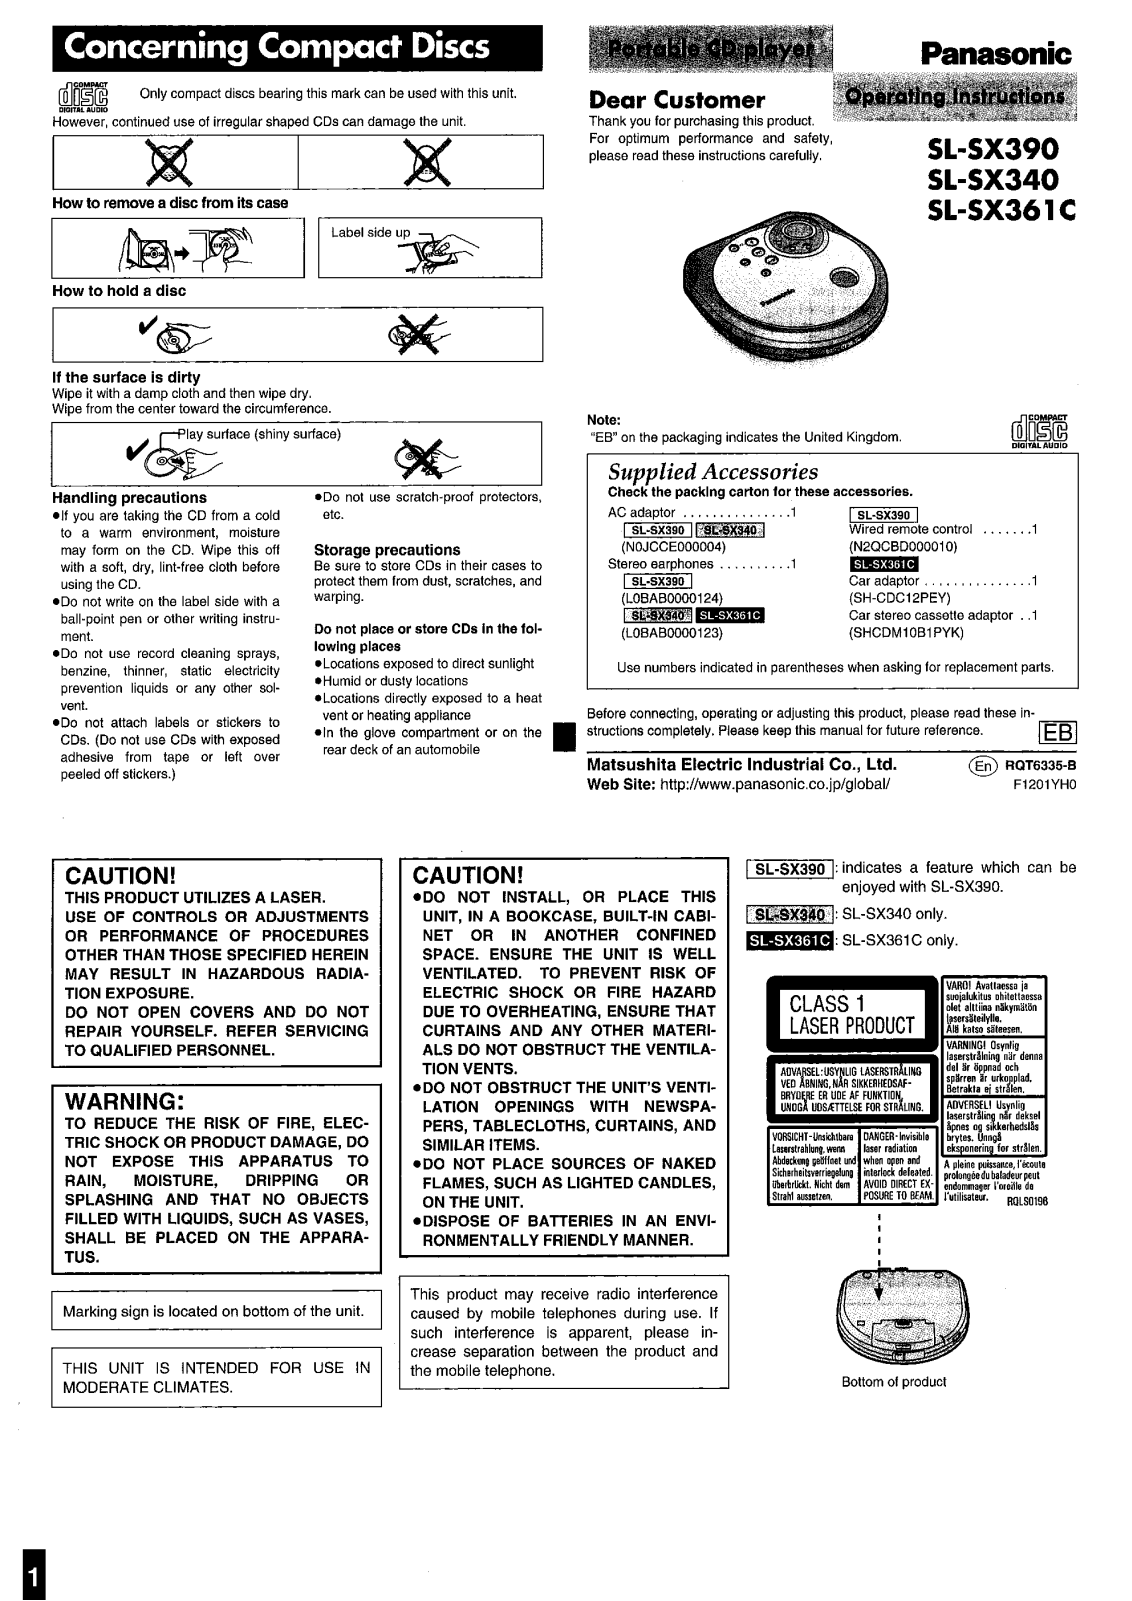 Panasonic SL-SX361 User Manual